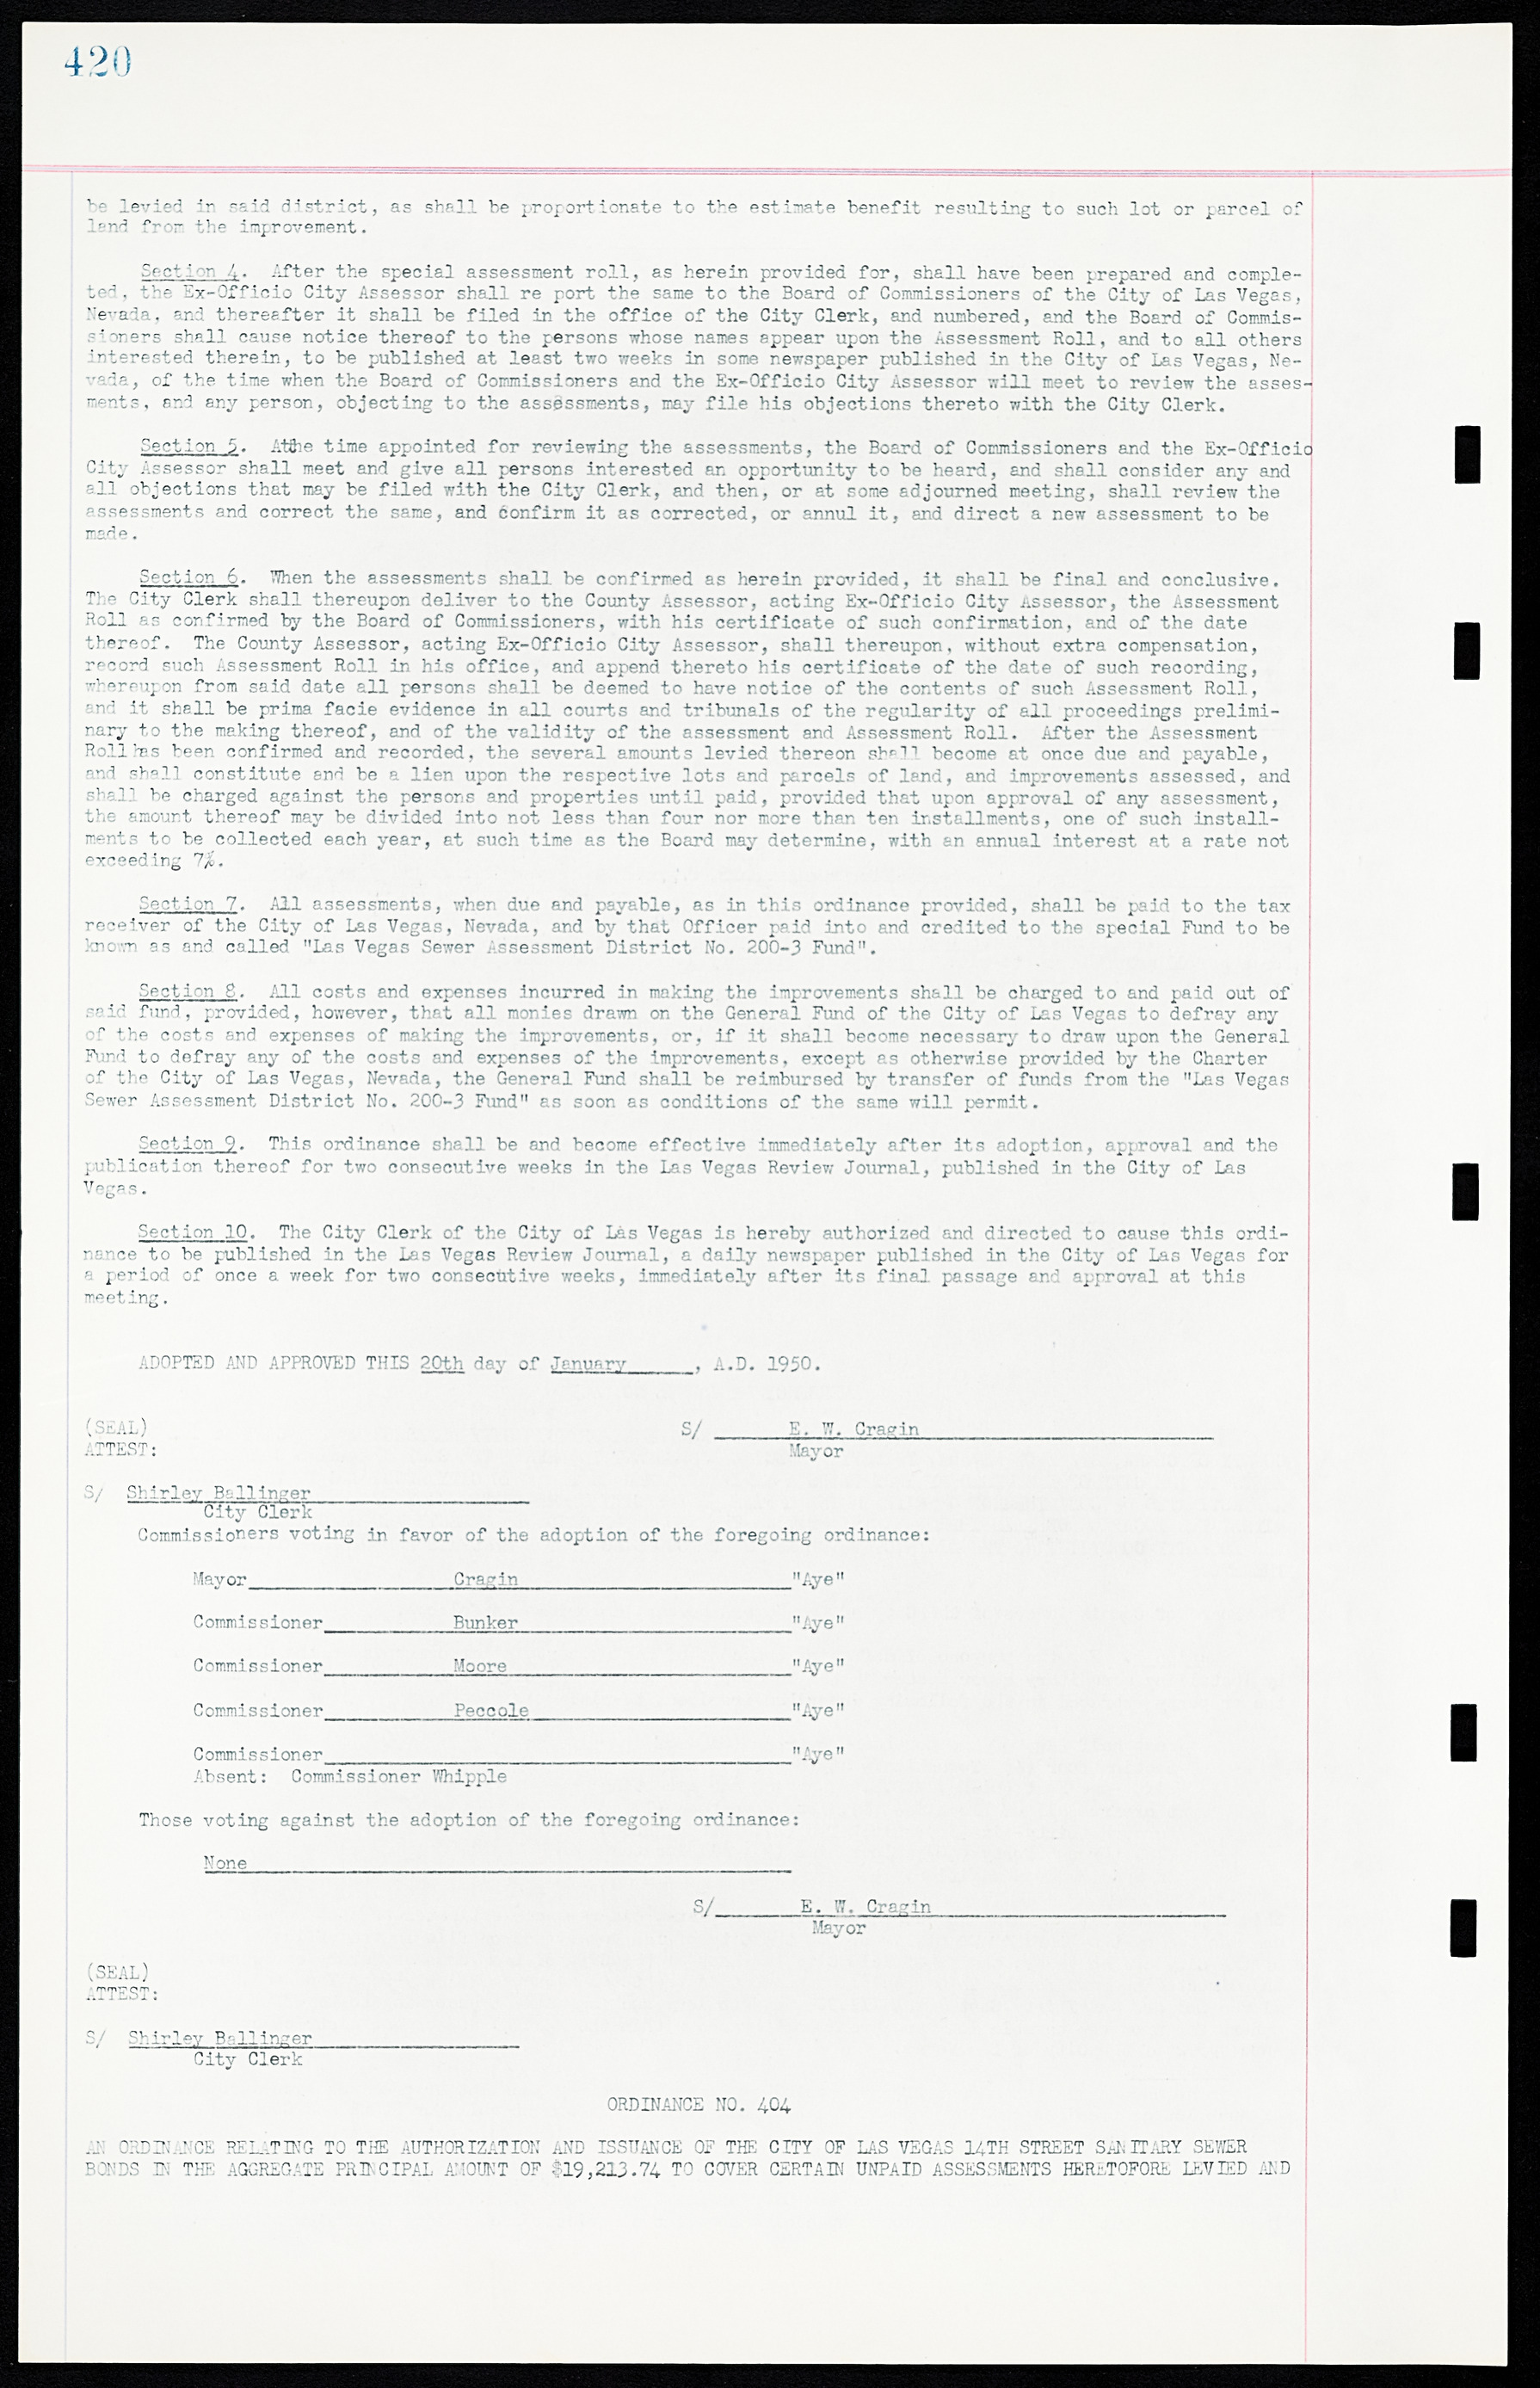 Las Vegas City Ordinances, March 31, 1933 to October 25, 1950, lvc000014-453